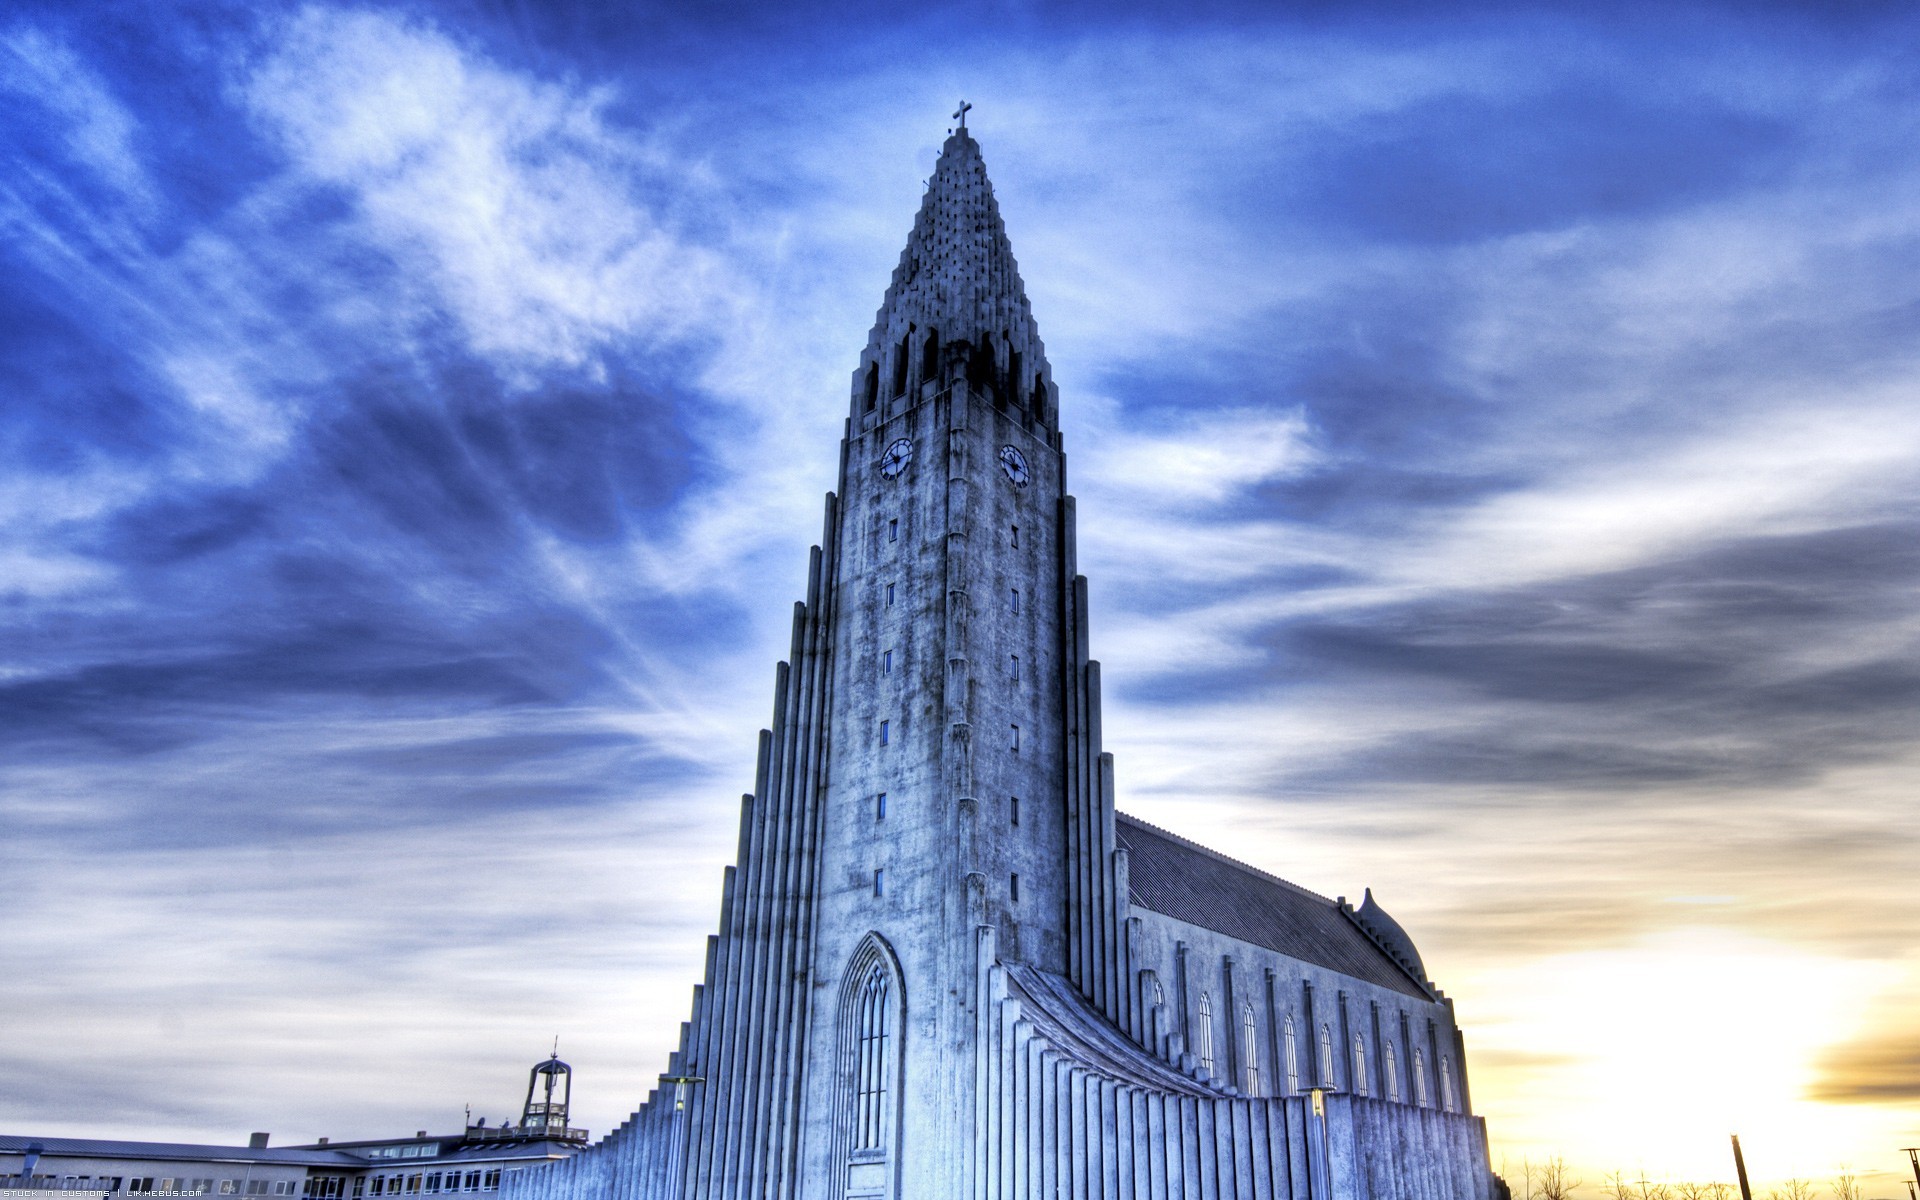 reykjavik wallpaper,landmark,sky,architecture,tower,steeple